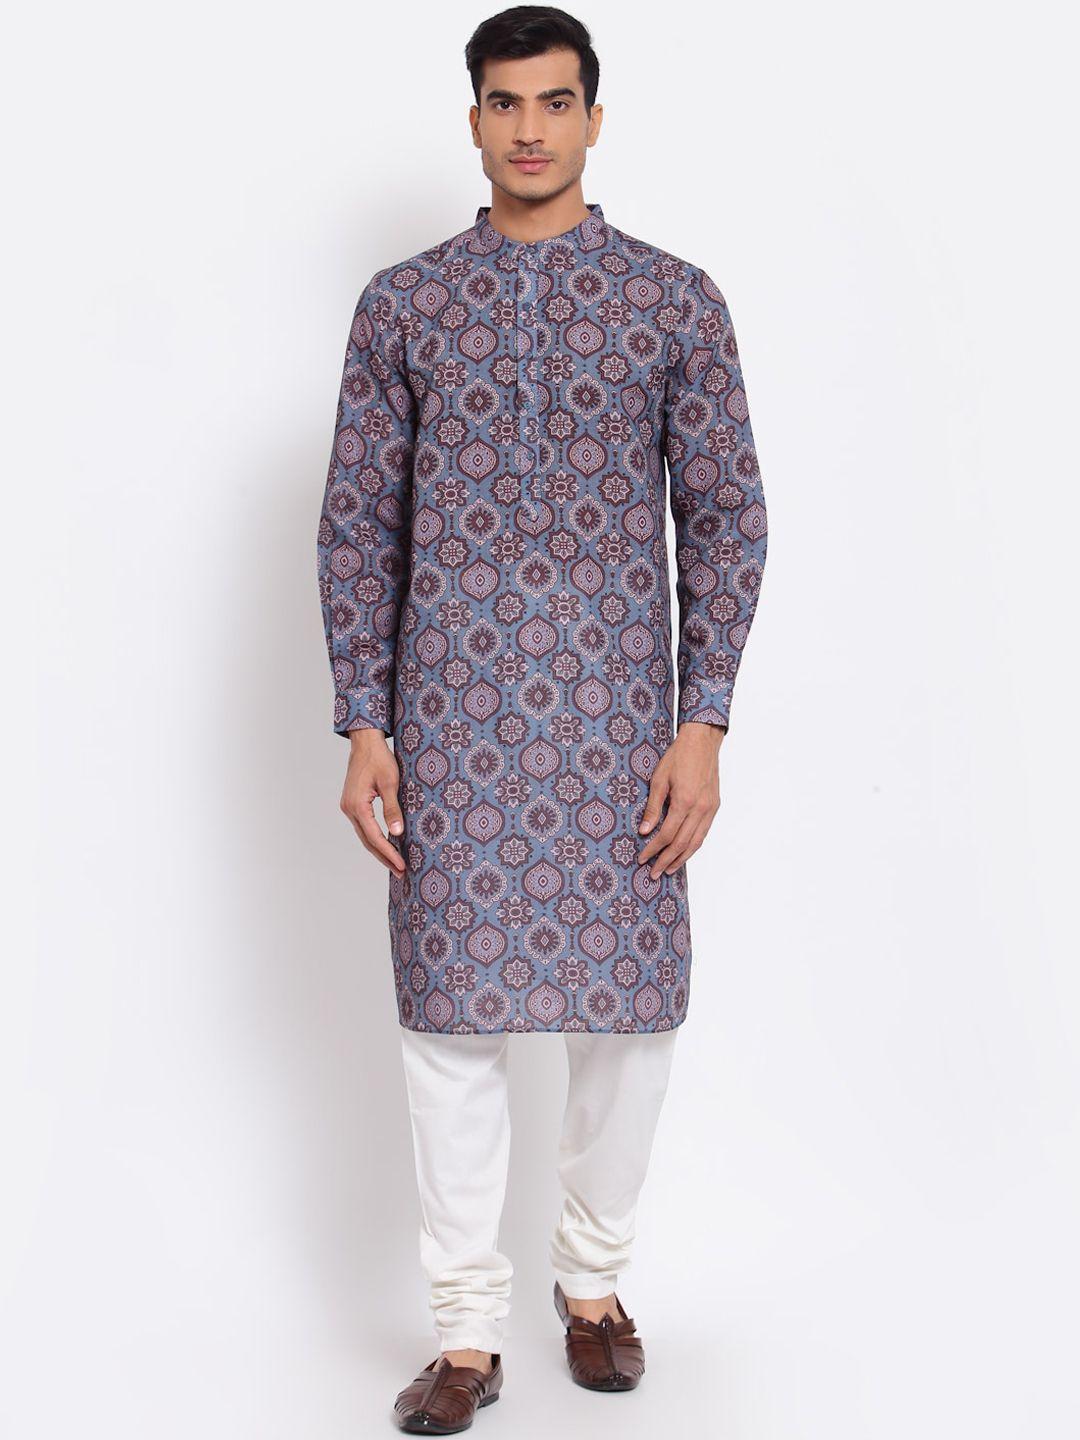 style quotient men blue & brown ethnic motifs printed kurta